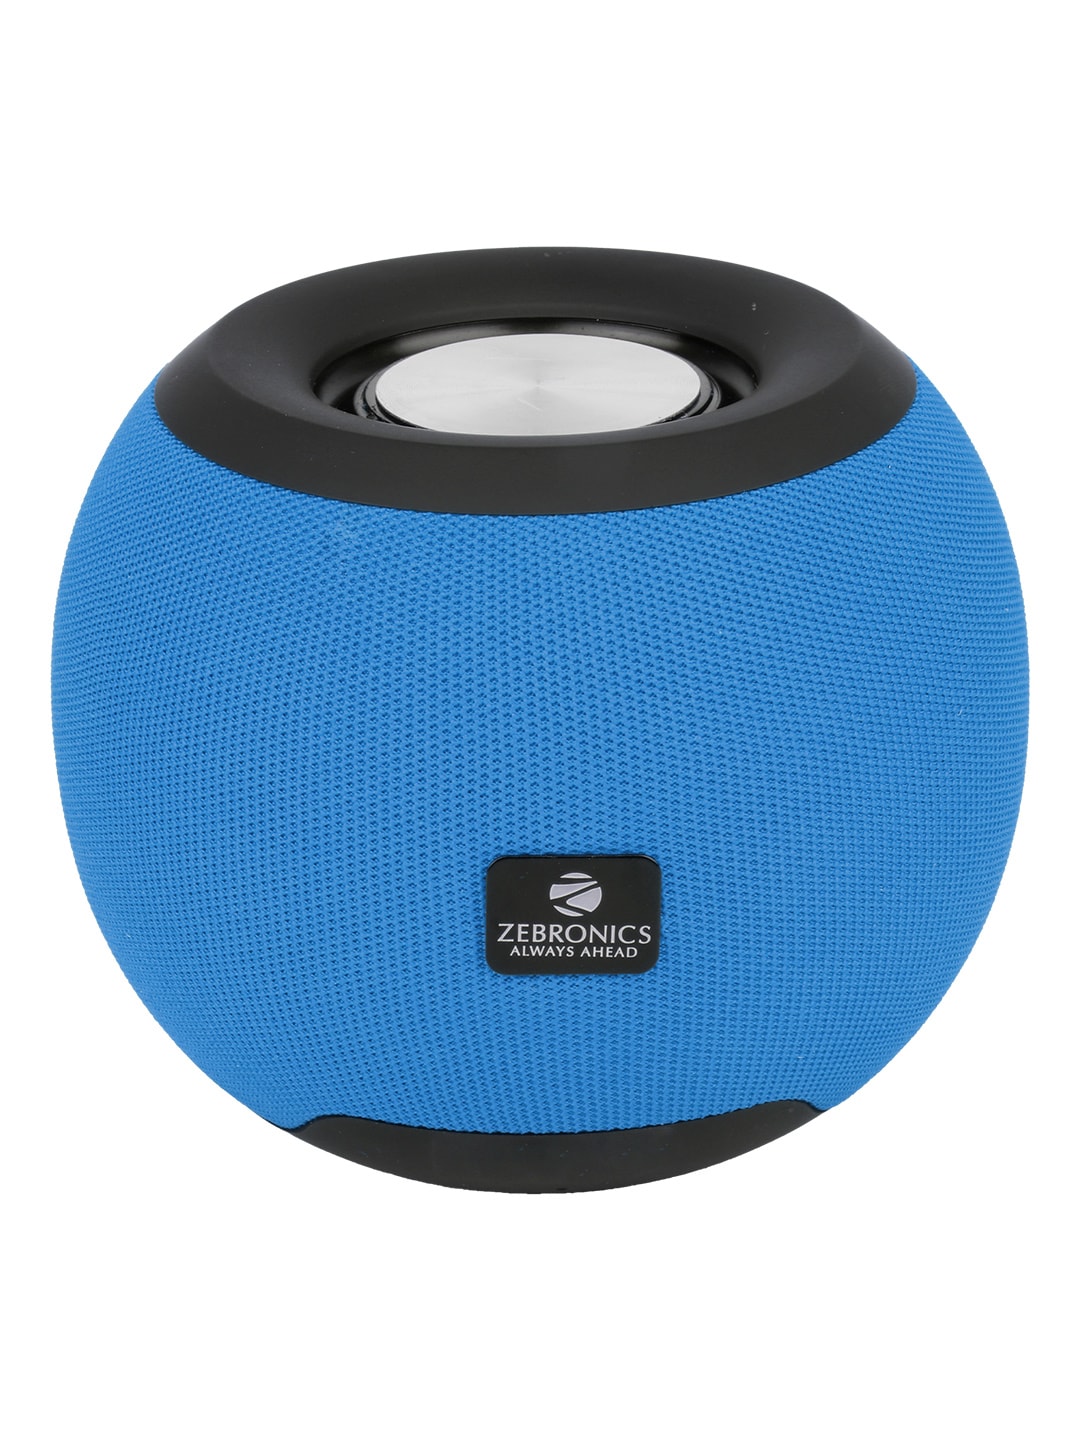 ZEBRONICS ZEB-BELLOW 40 Wireless Bluetooth 8W Portable Speaker - Blue Price in India